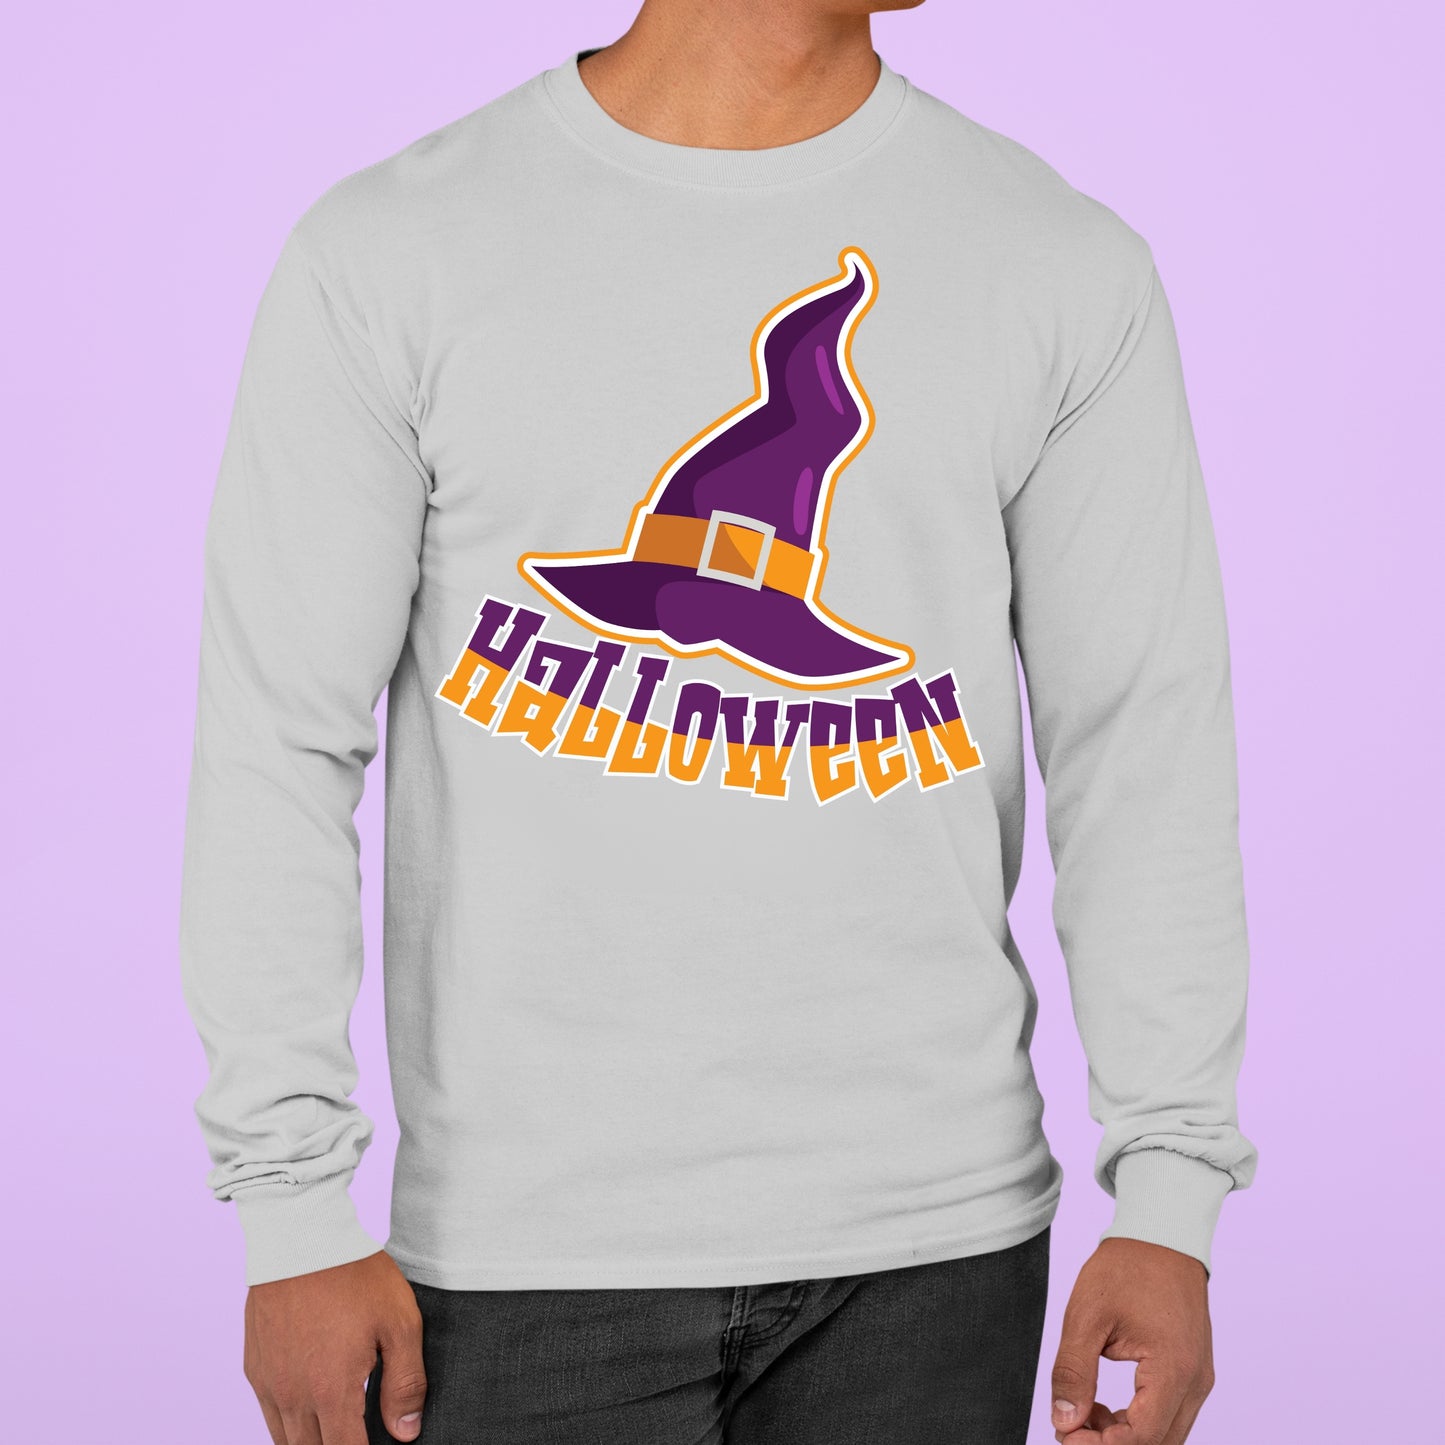 Halloween, Halloween Gift Sweatshirt, Halloween Sweater, Cute Halloween Sweatshirt, Funny Halloween Sweatshirt, Halloween Design Shirt